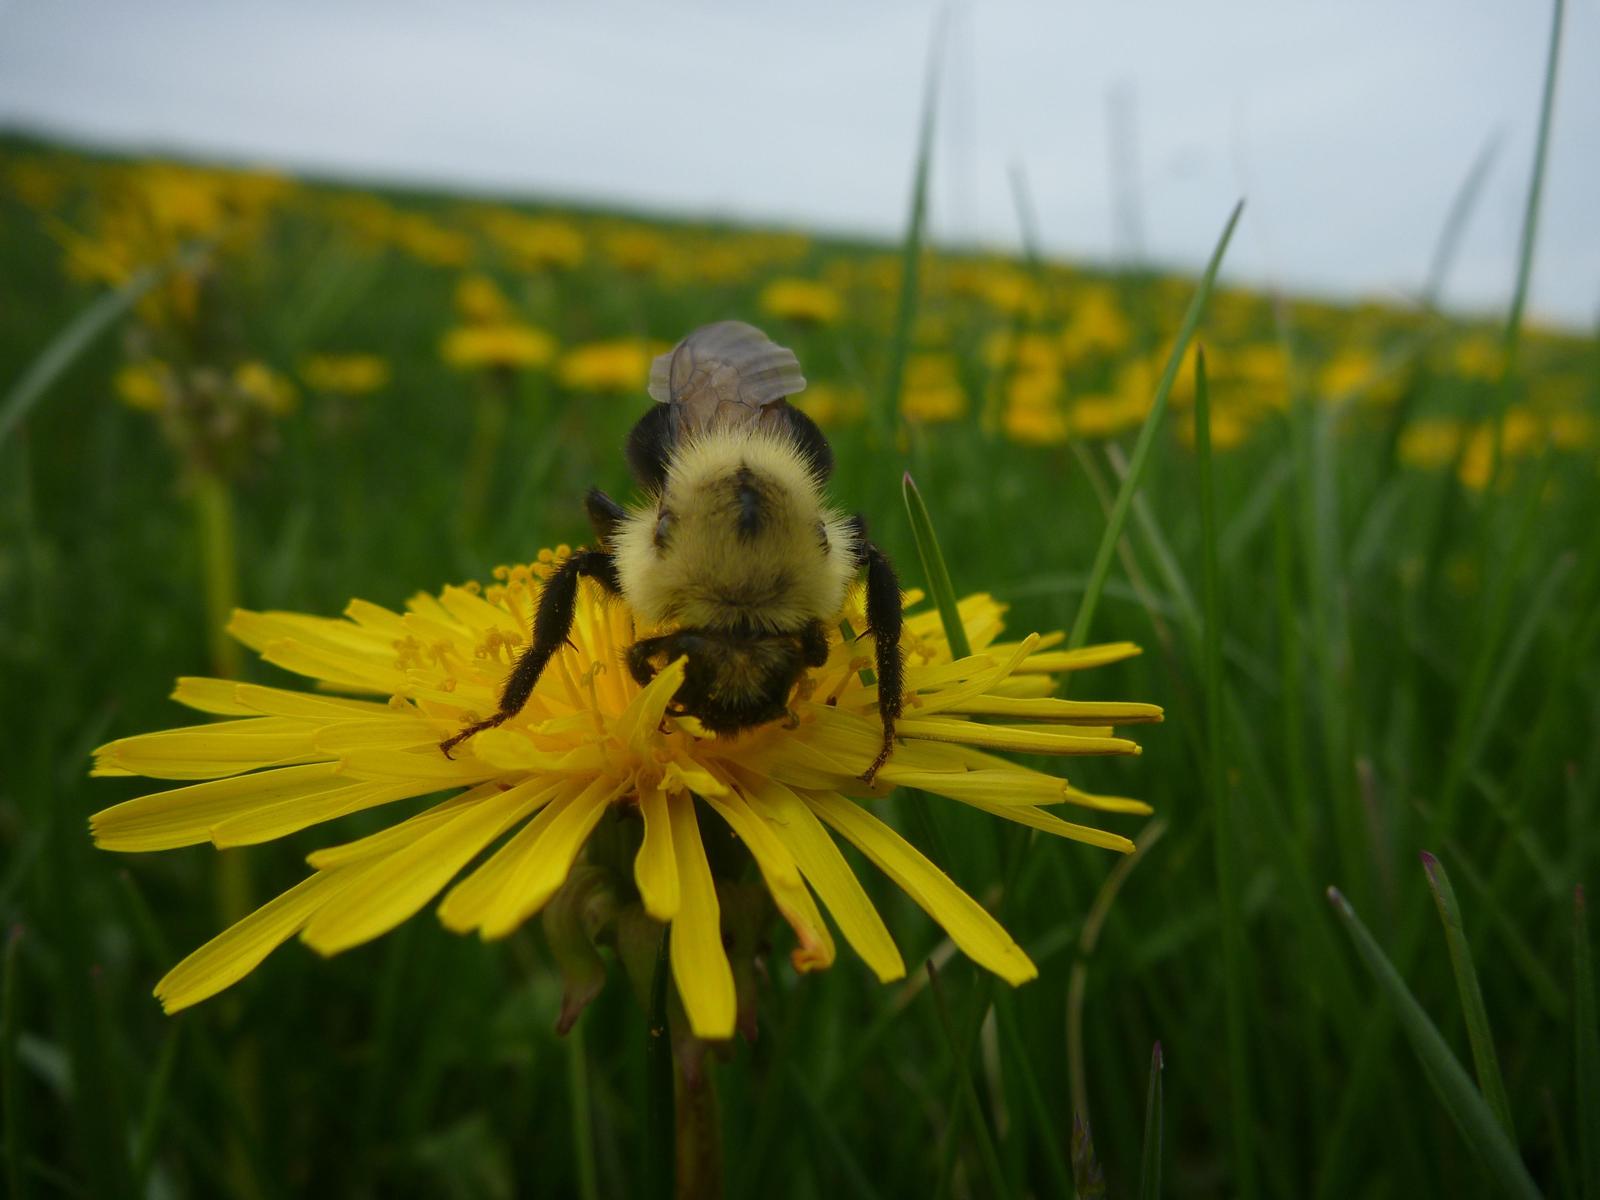 Lemon cuckoo bumble bee Photo by Victoria MacPhail